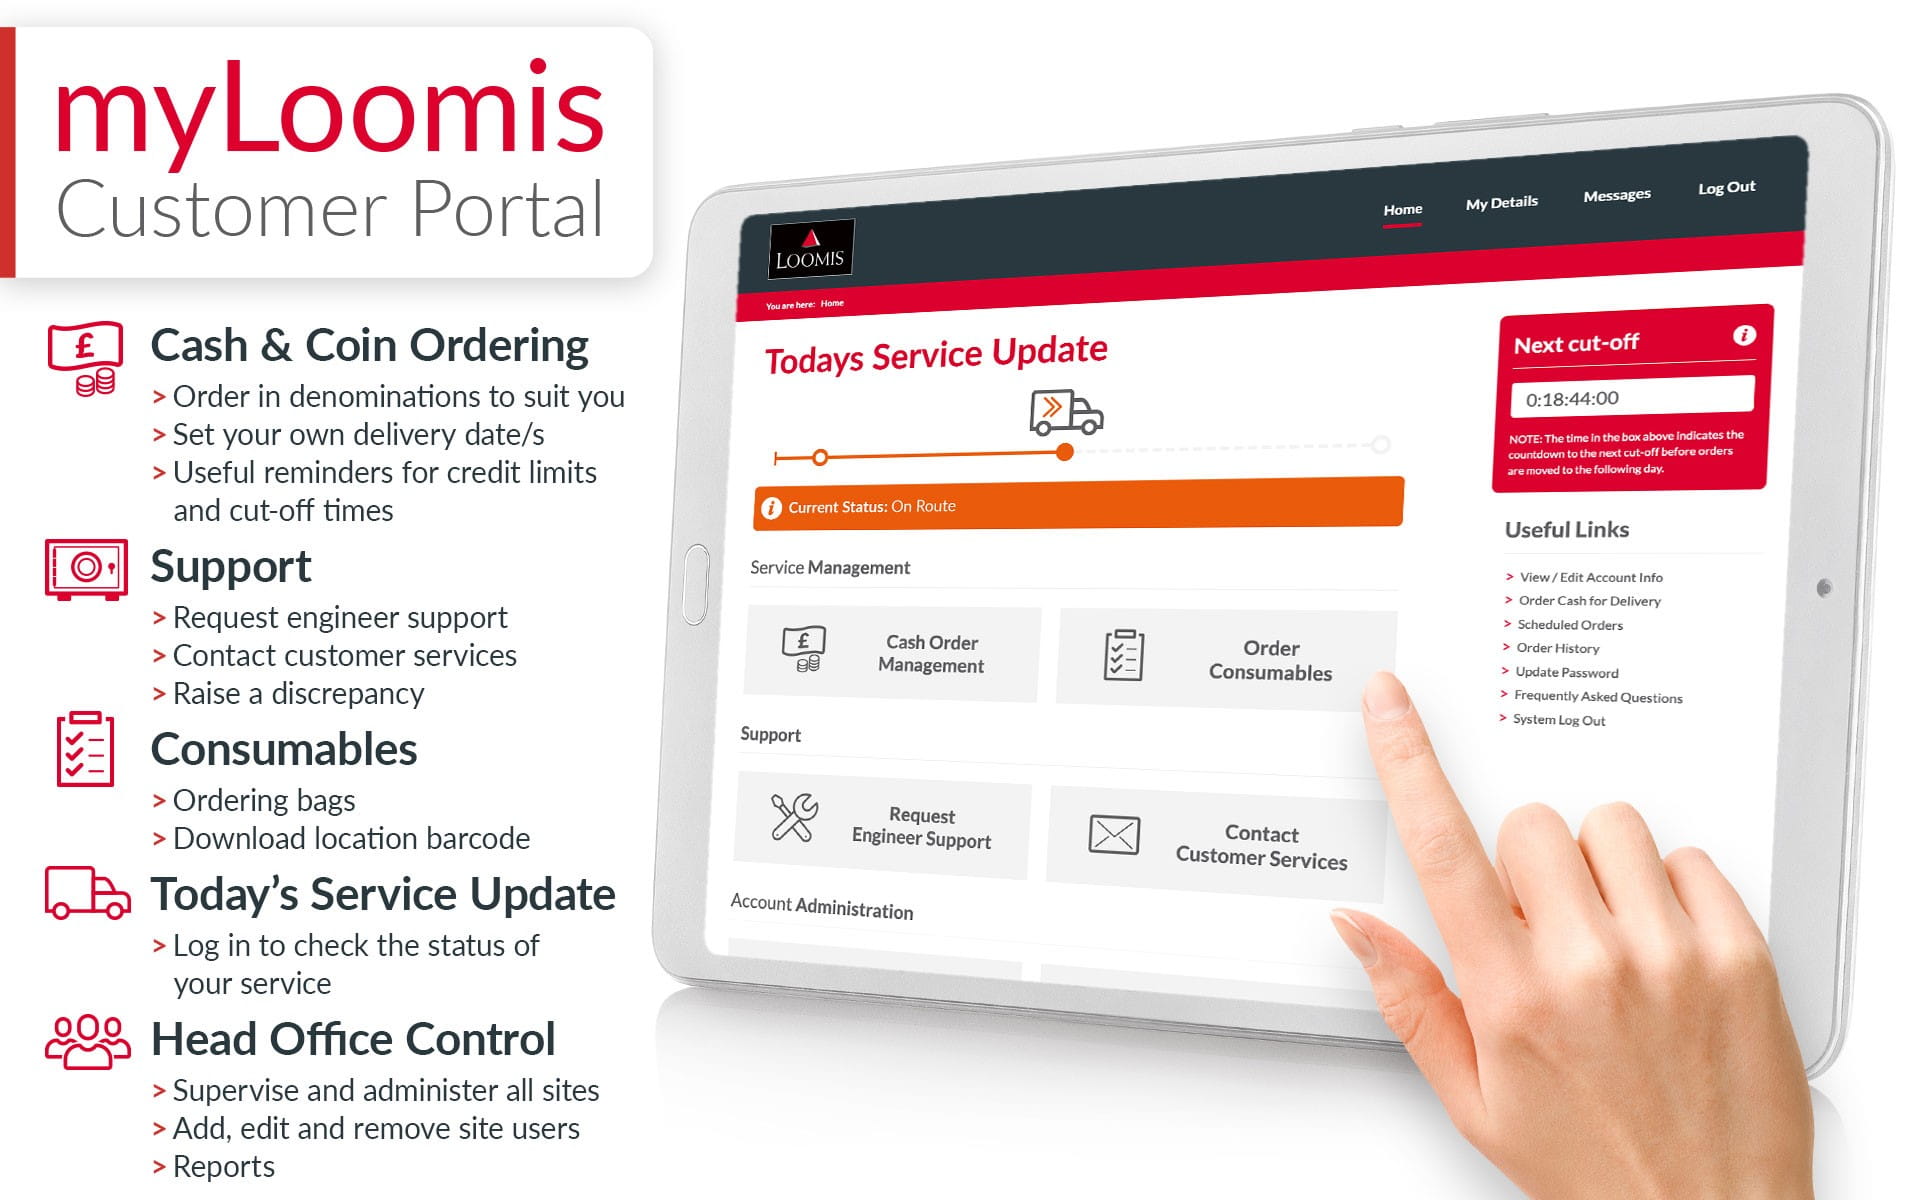 myLoomis customer portal service update